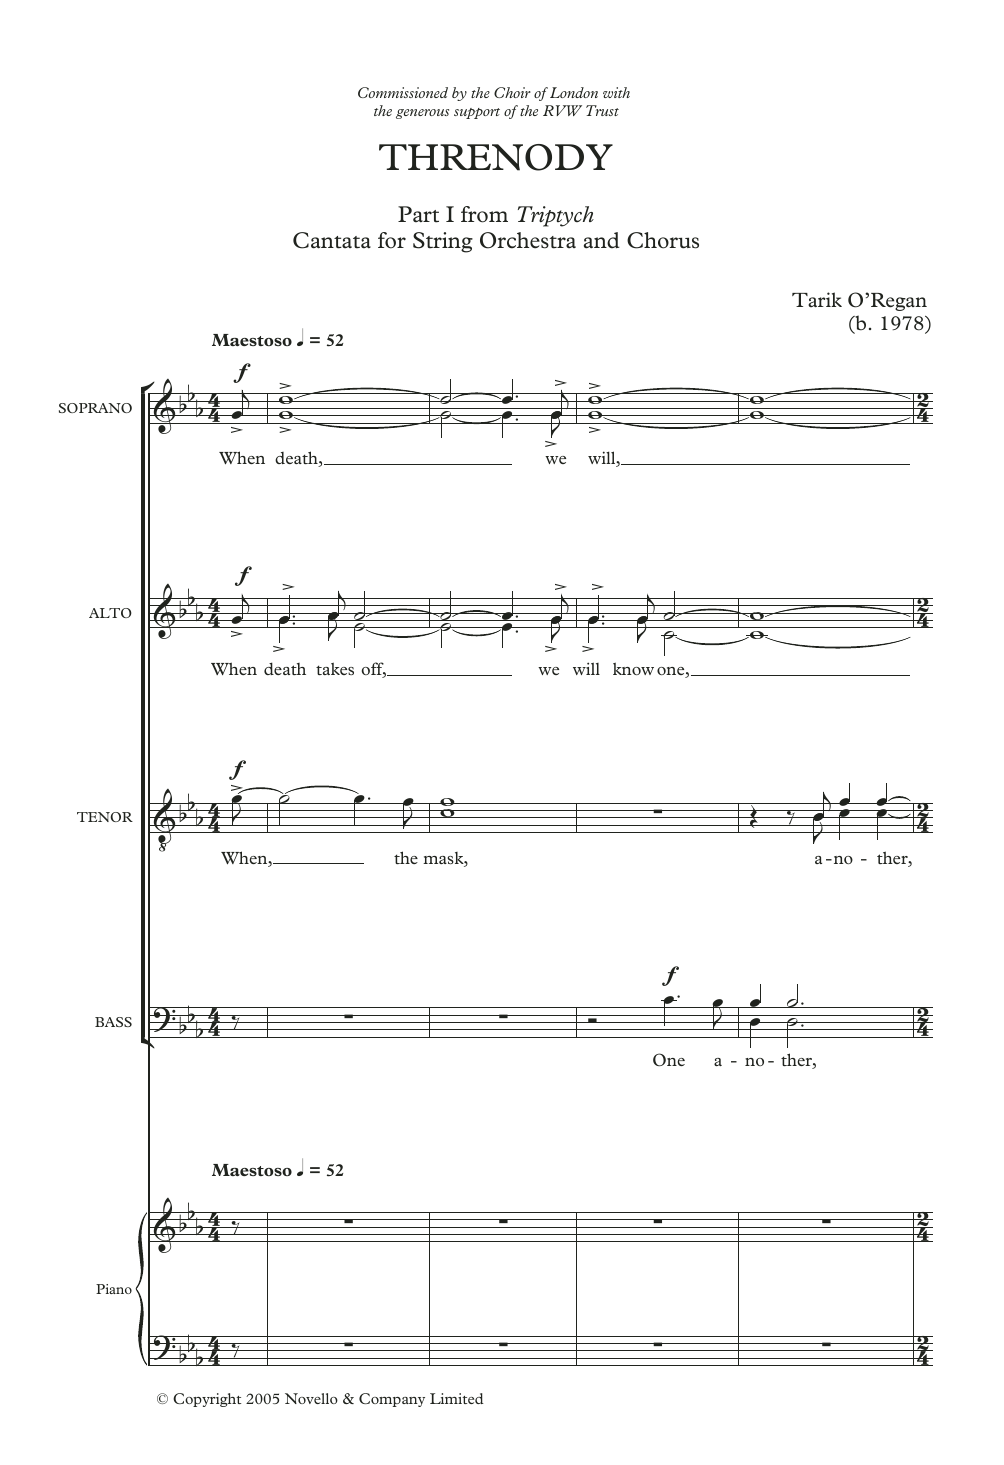 Download Tarik O'Regan Threnody Sheet Music and learn how to play SATB Choir PDF digital score in minutes